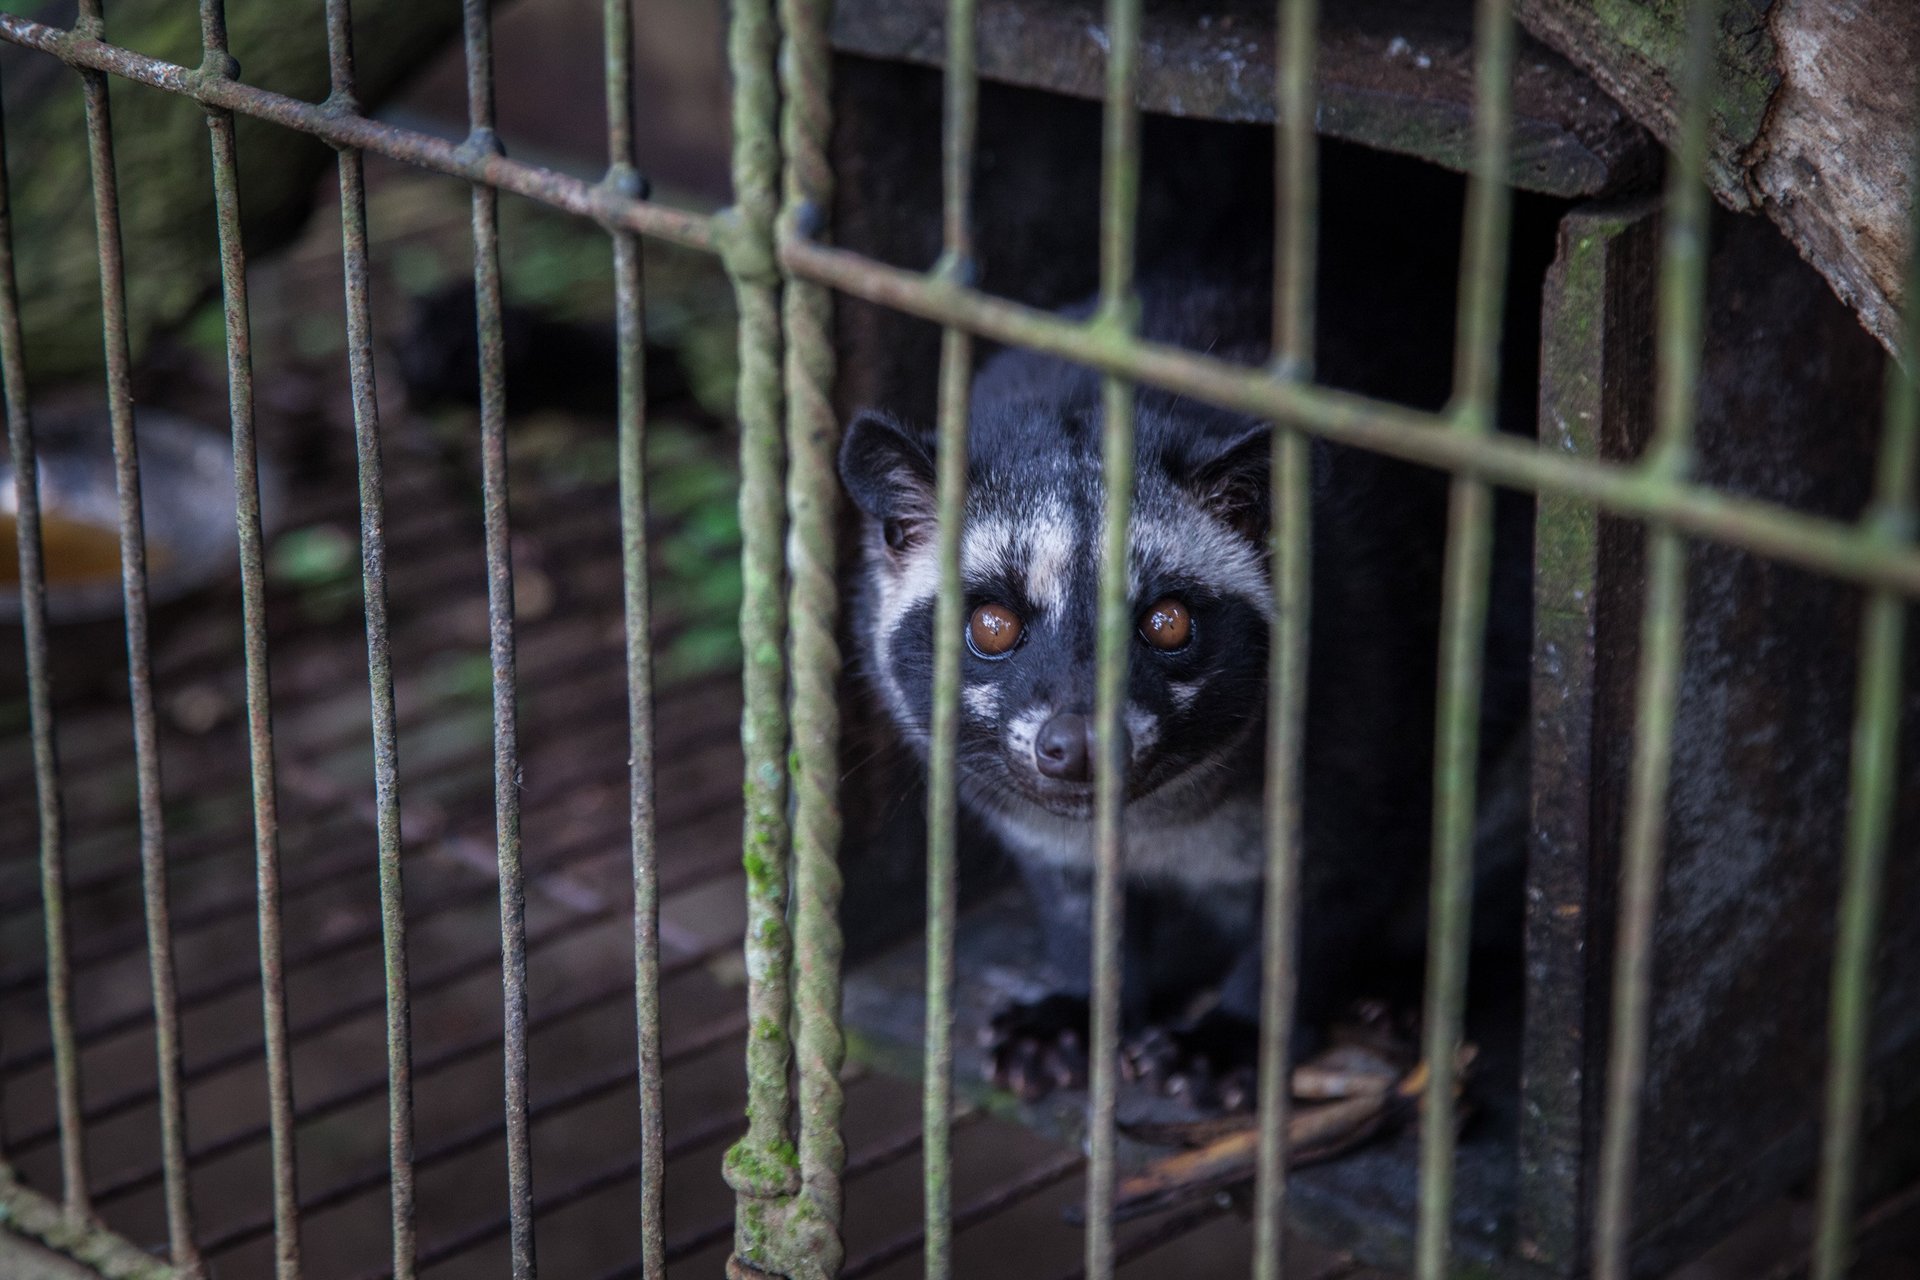 A caged civet cat at a Luwak coffee farm in Tampaksiring, Bali, Indonesia